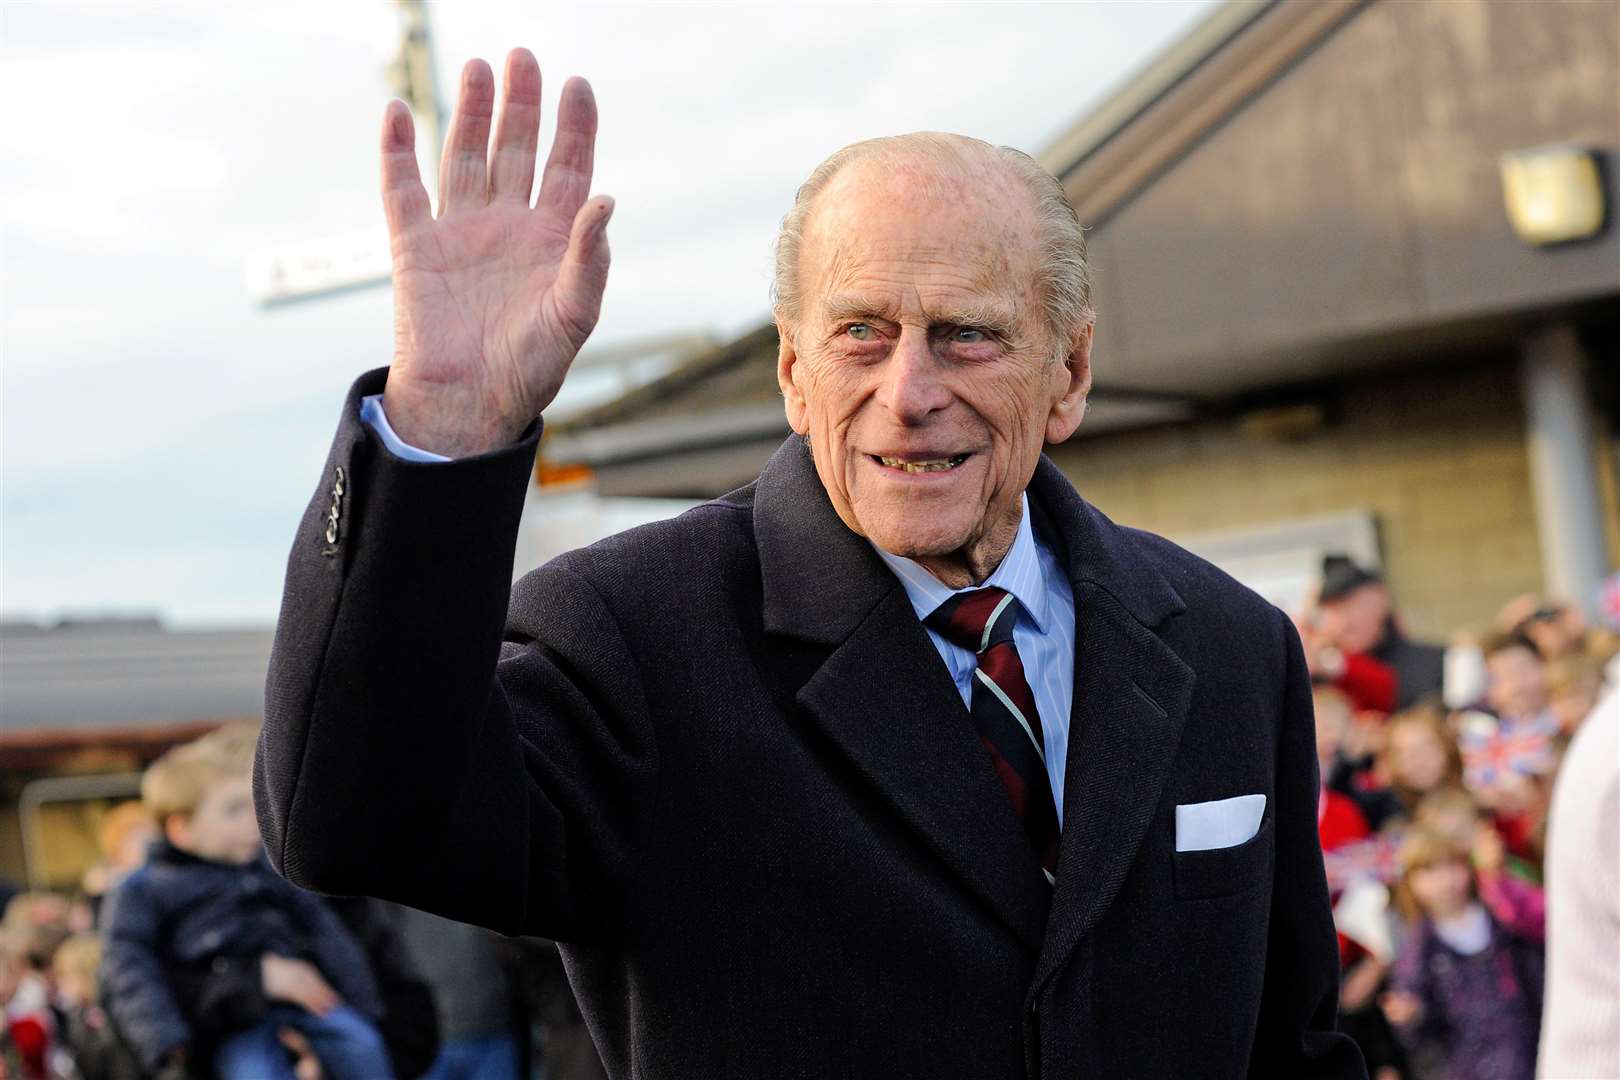 The Duke of Edinburgh waves to the crowd as he departs Elgin Railway Station.